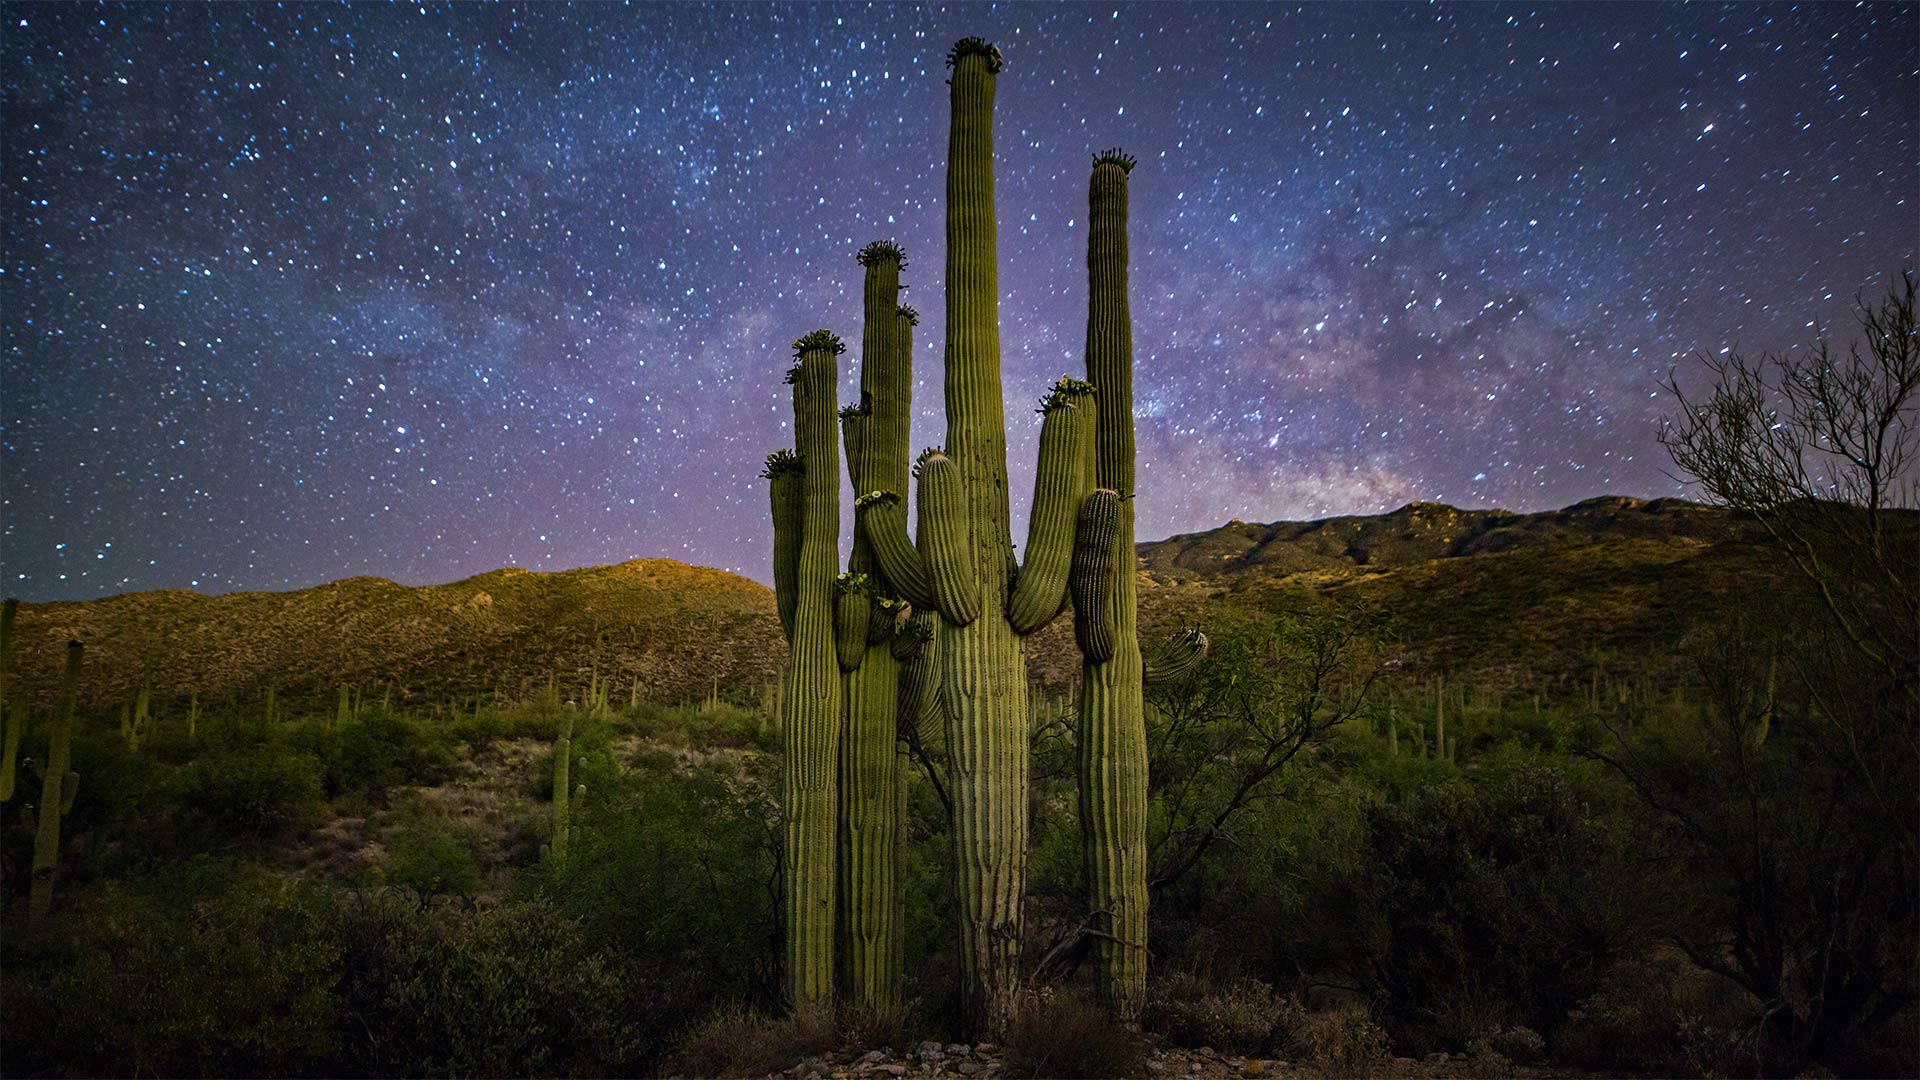 Saguaro 'family' and Milky Way, Saguaro National Park, Arizona - Christian Foto Az/Shutterstock)